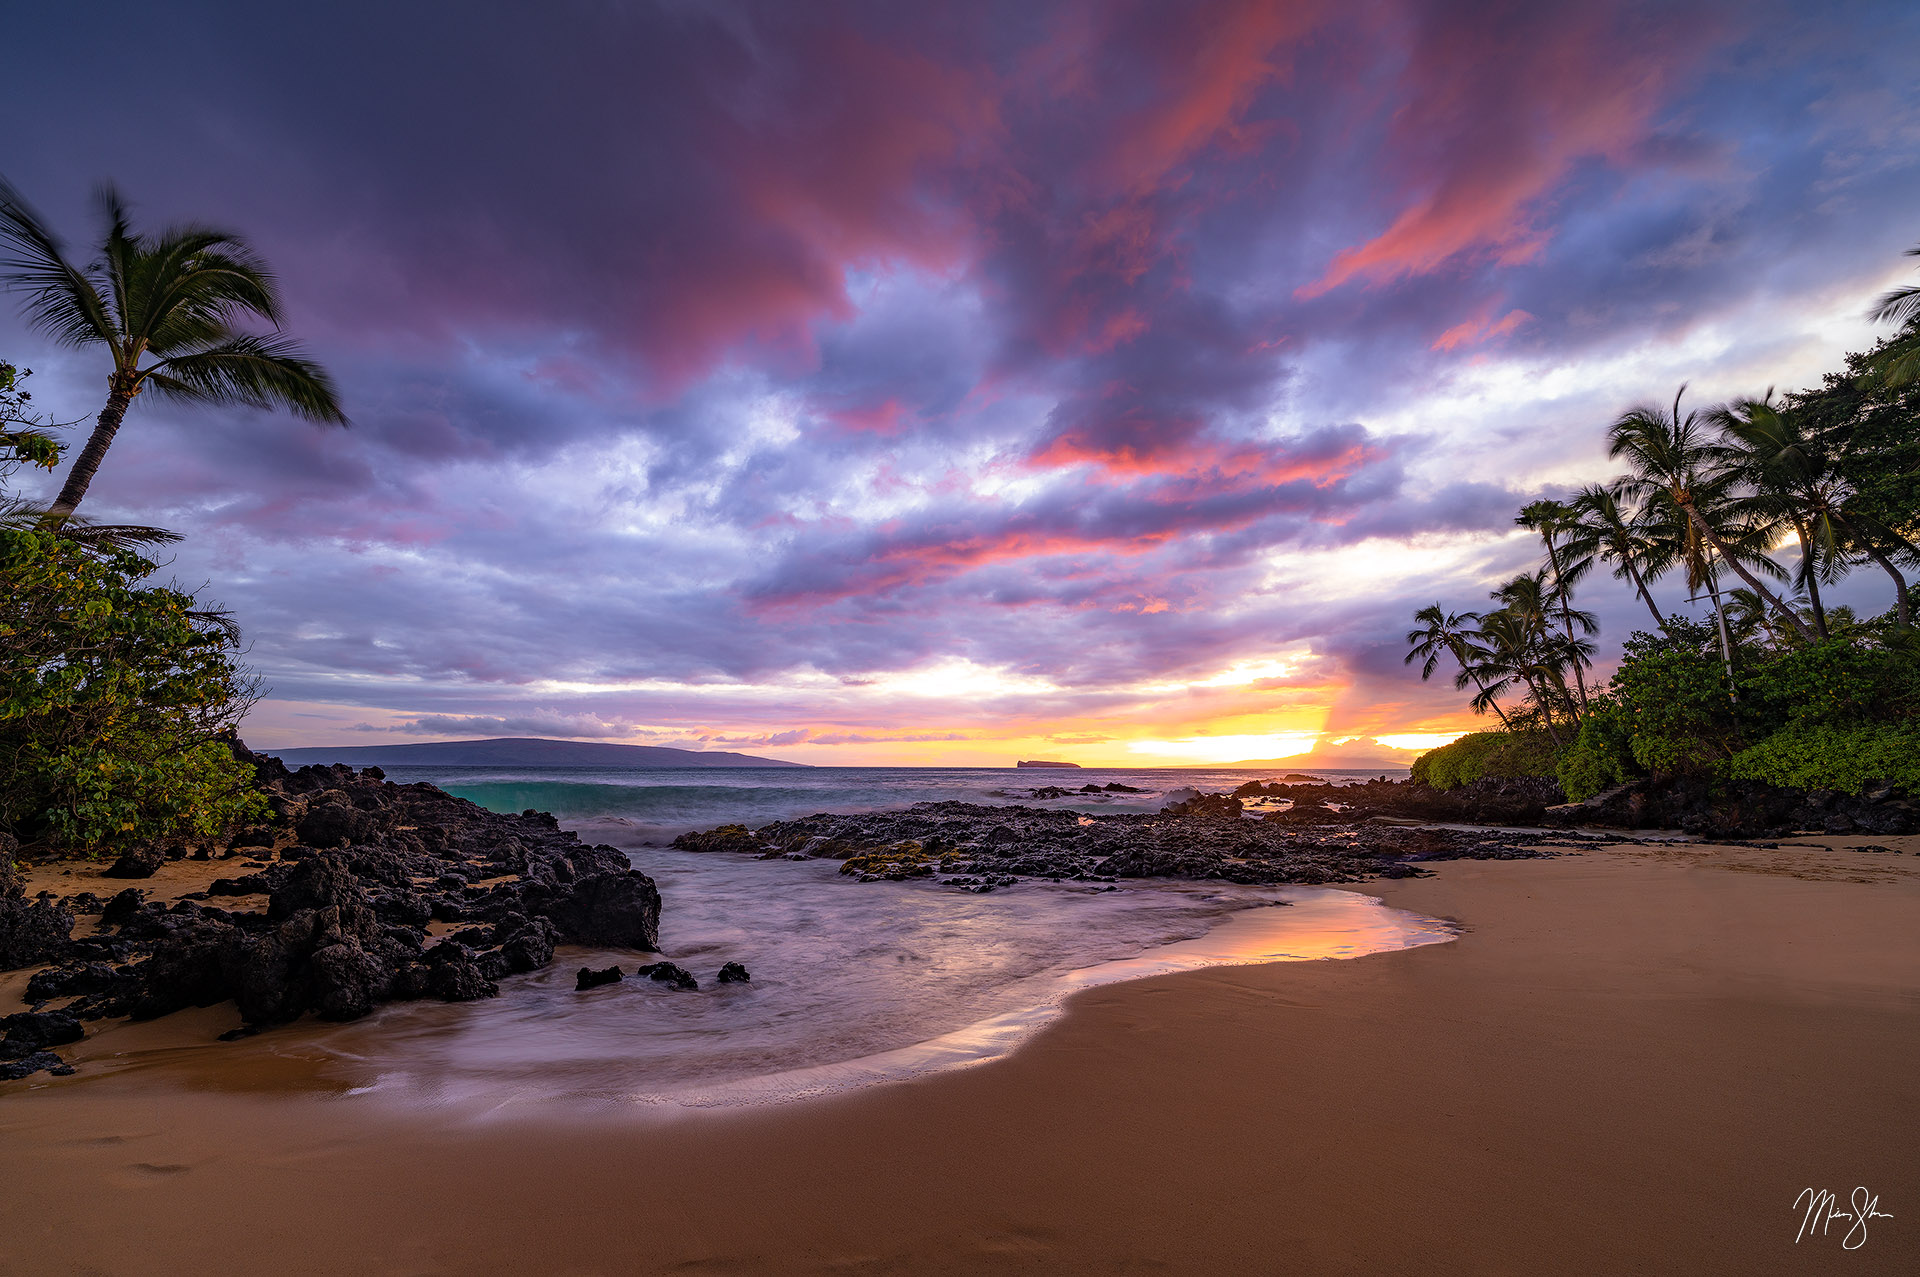 Maui Photography For Sale: Secret Beach at Sunset